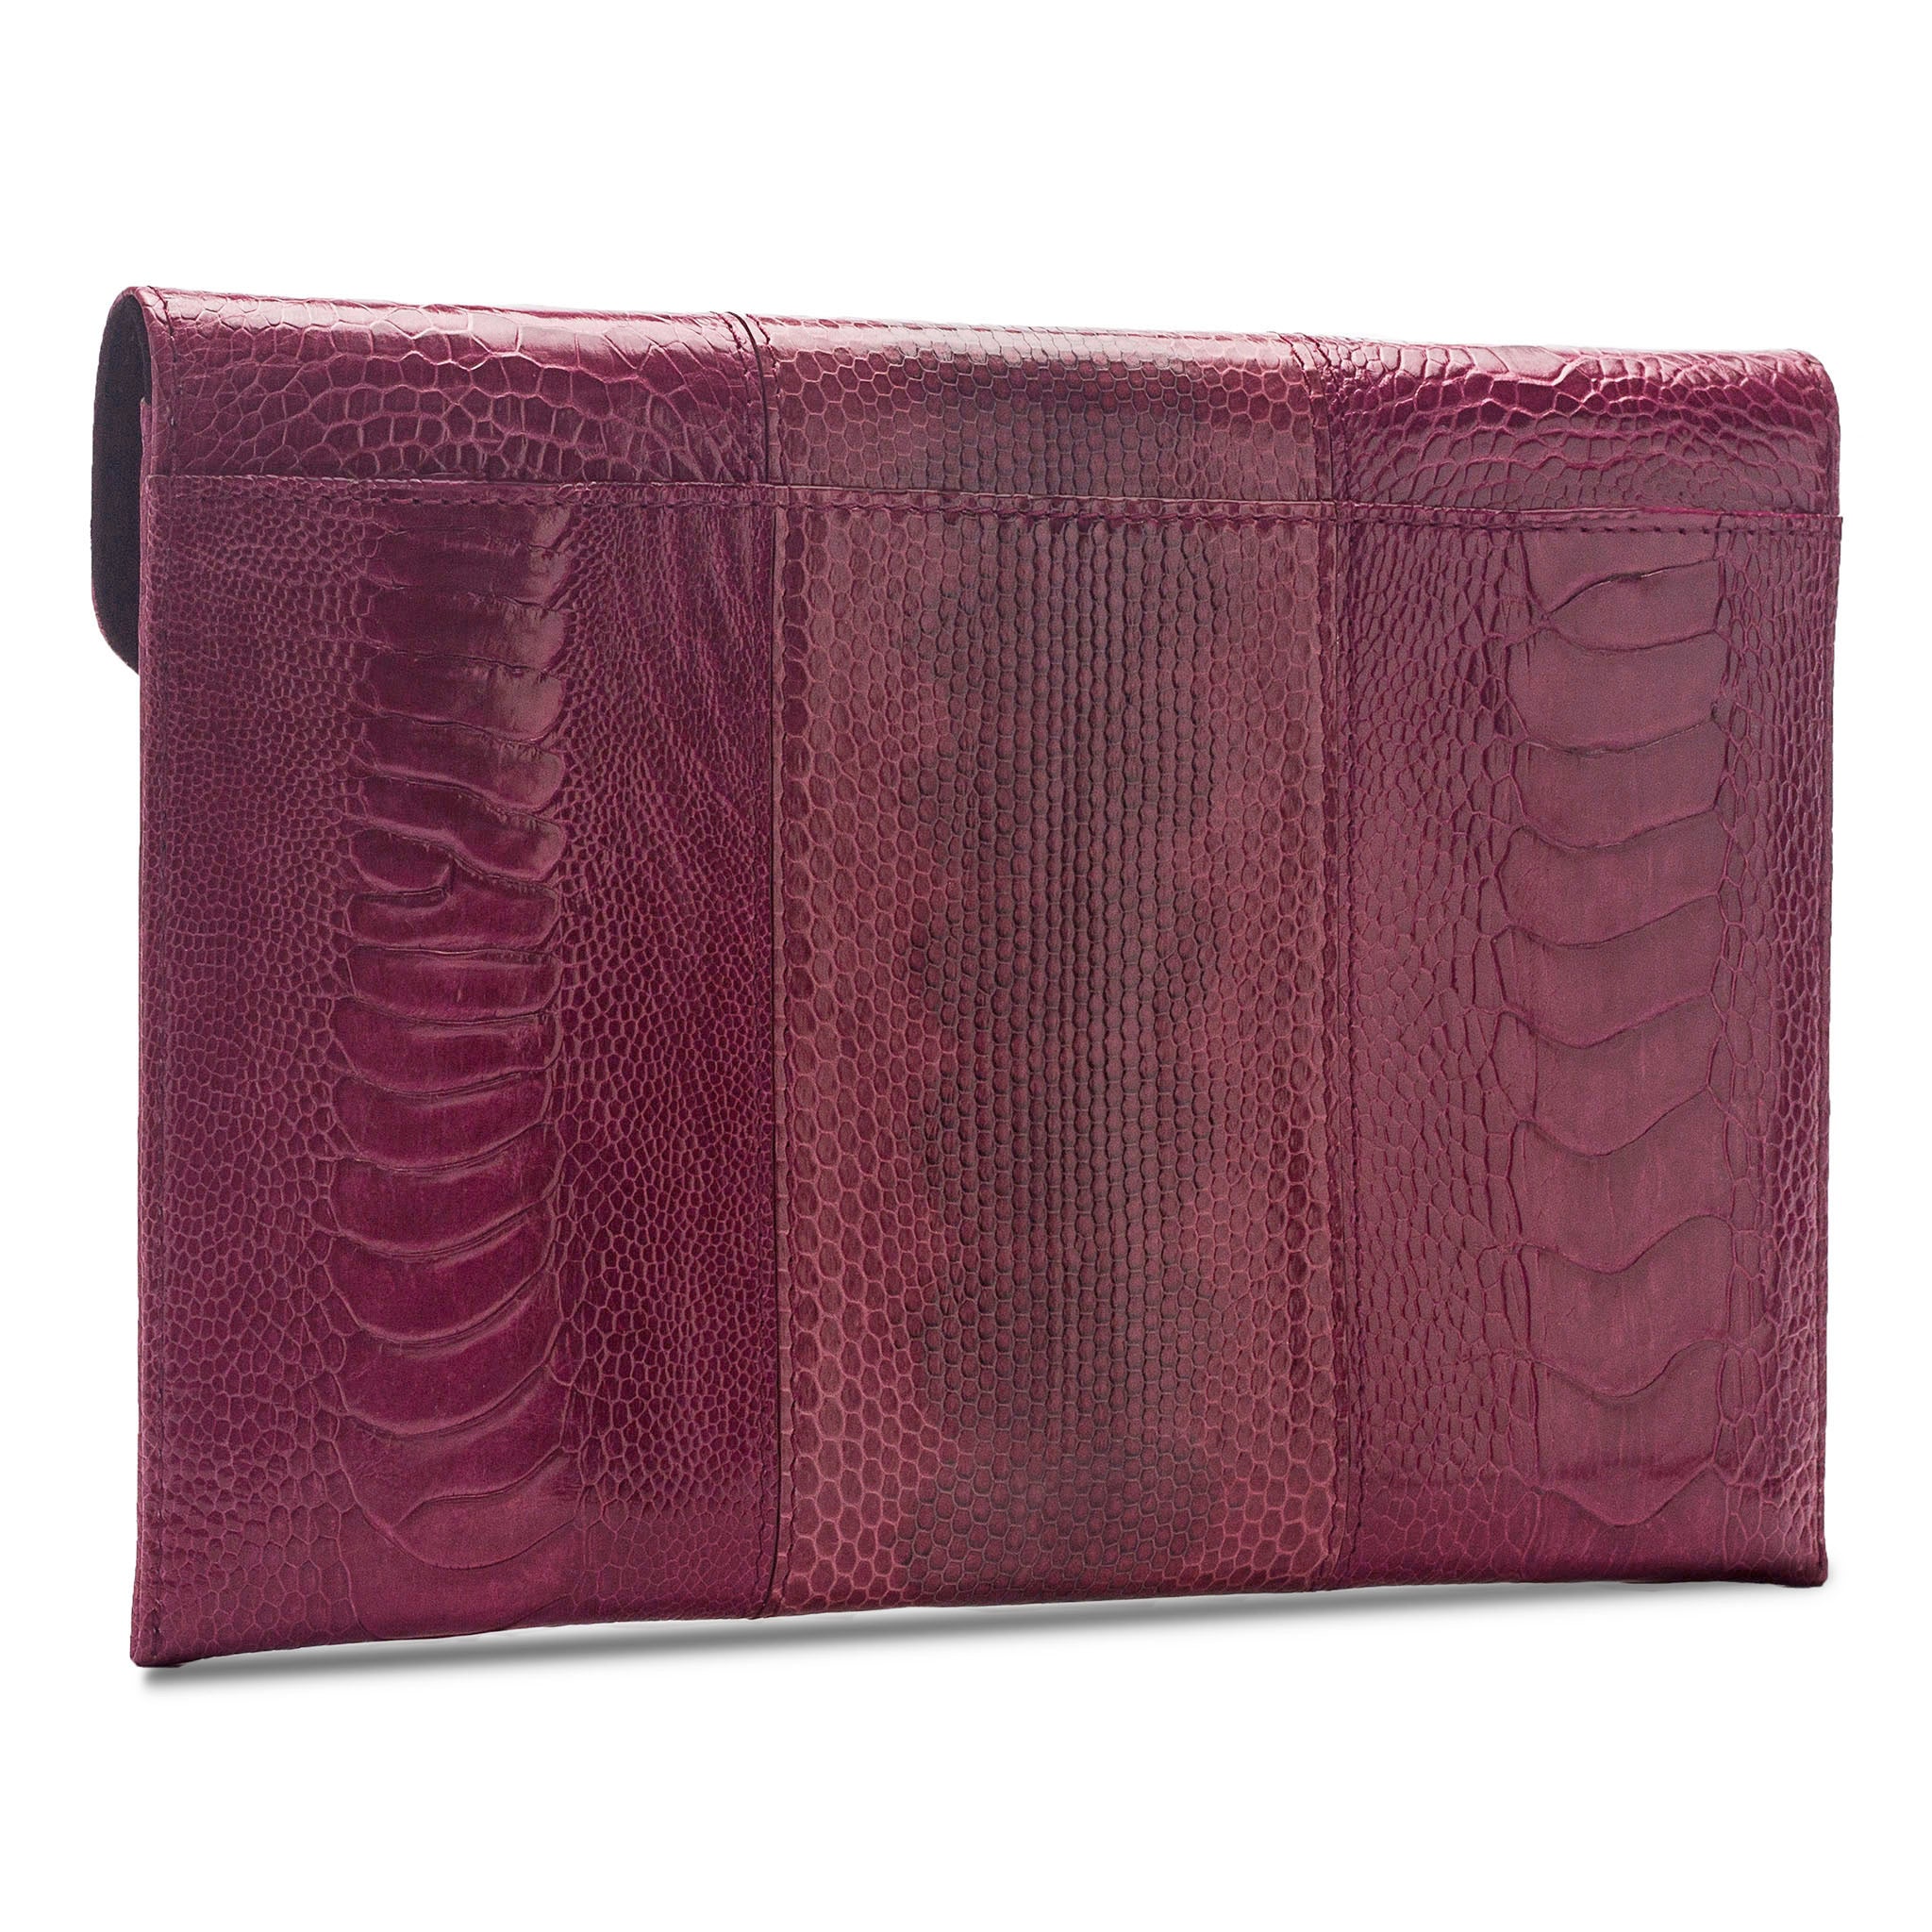 HYLong Women's Fashion Retro Snake Skin Envelope Bag Clutch Purse Evening  Bag: Handbags